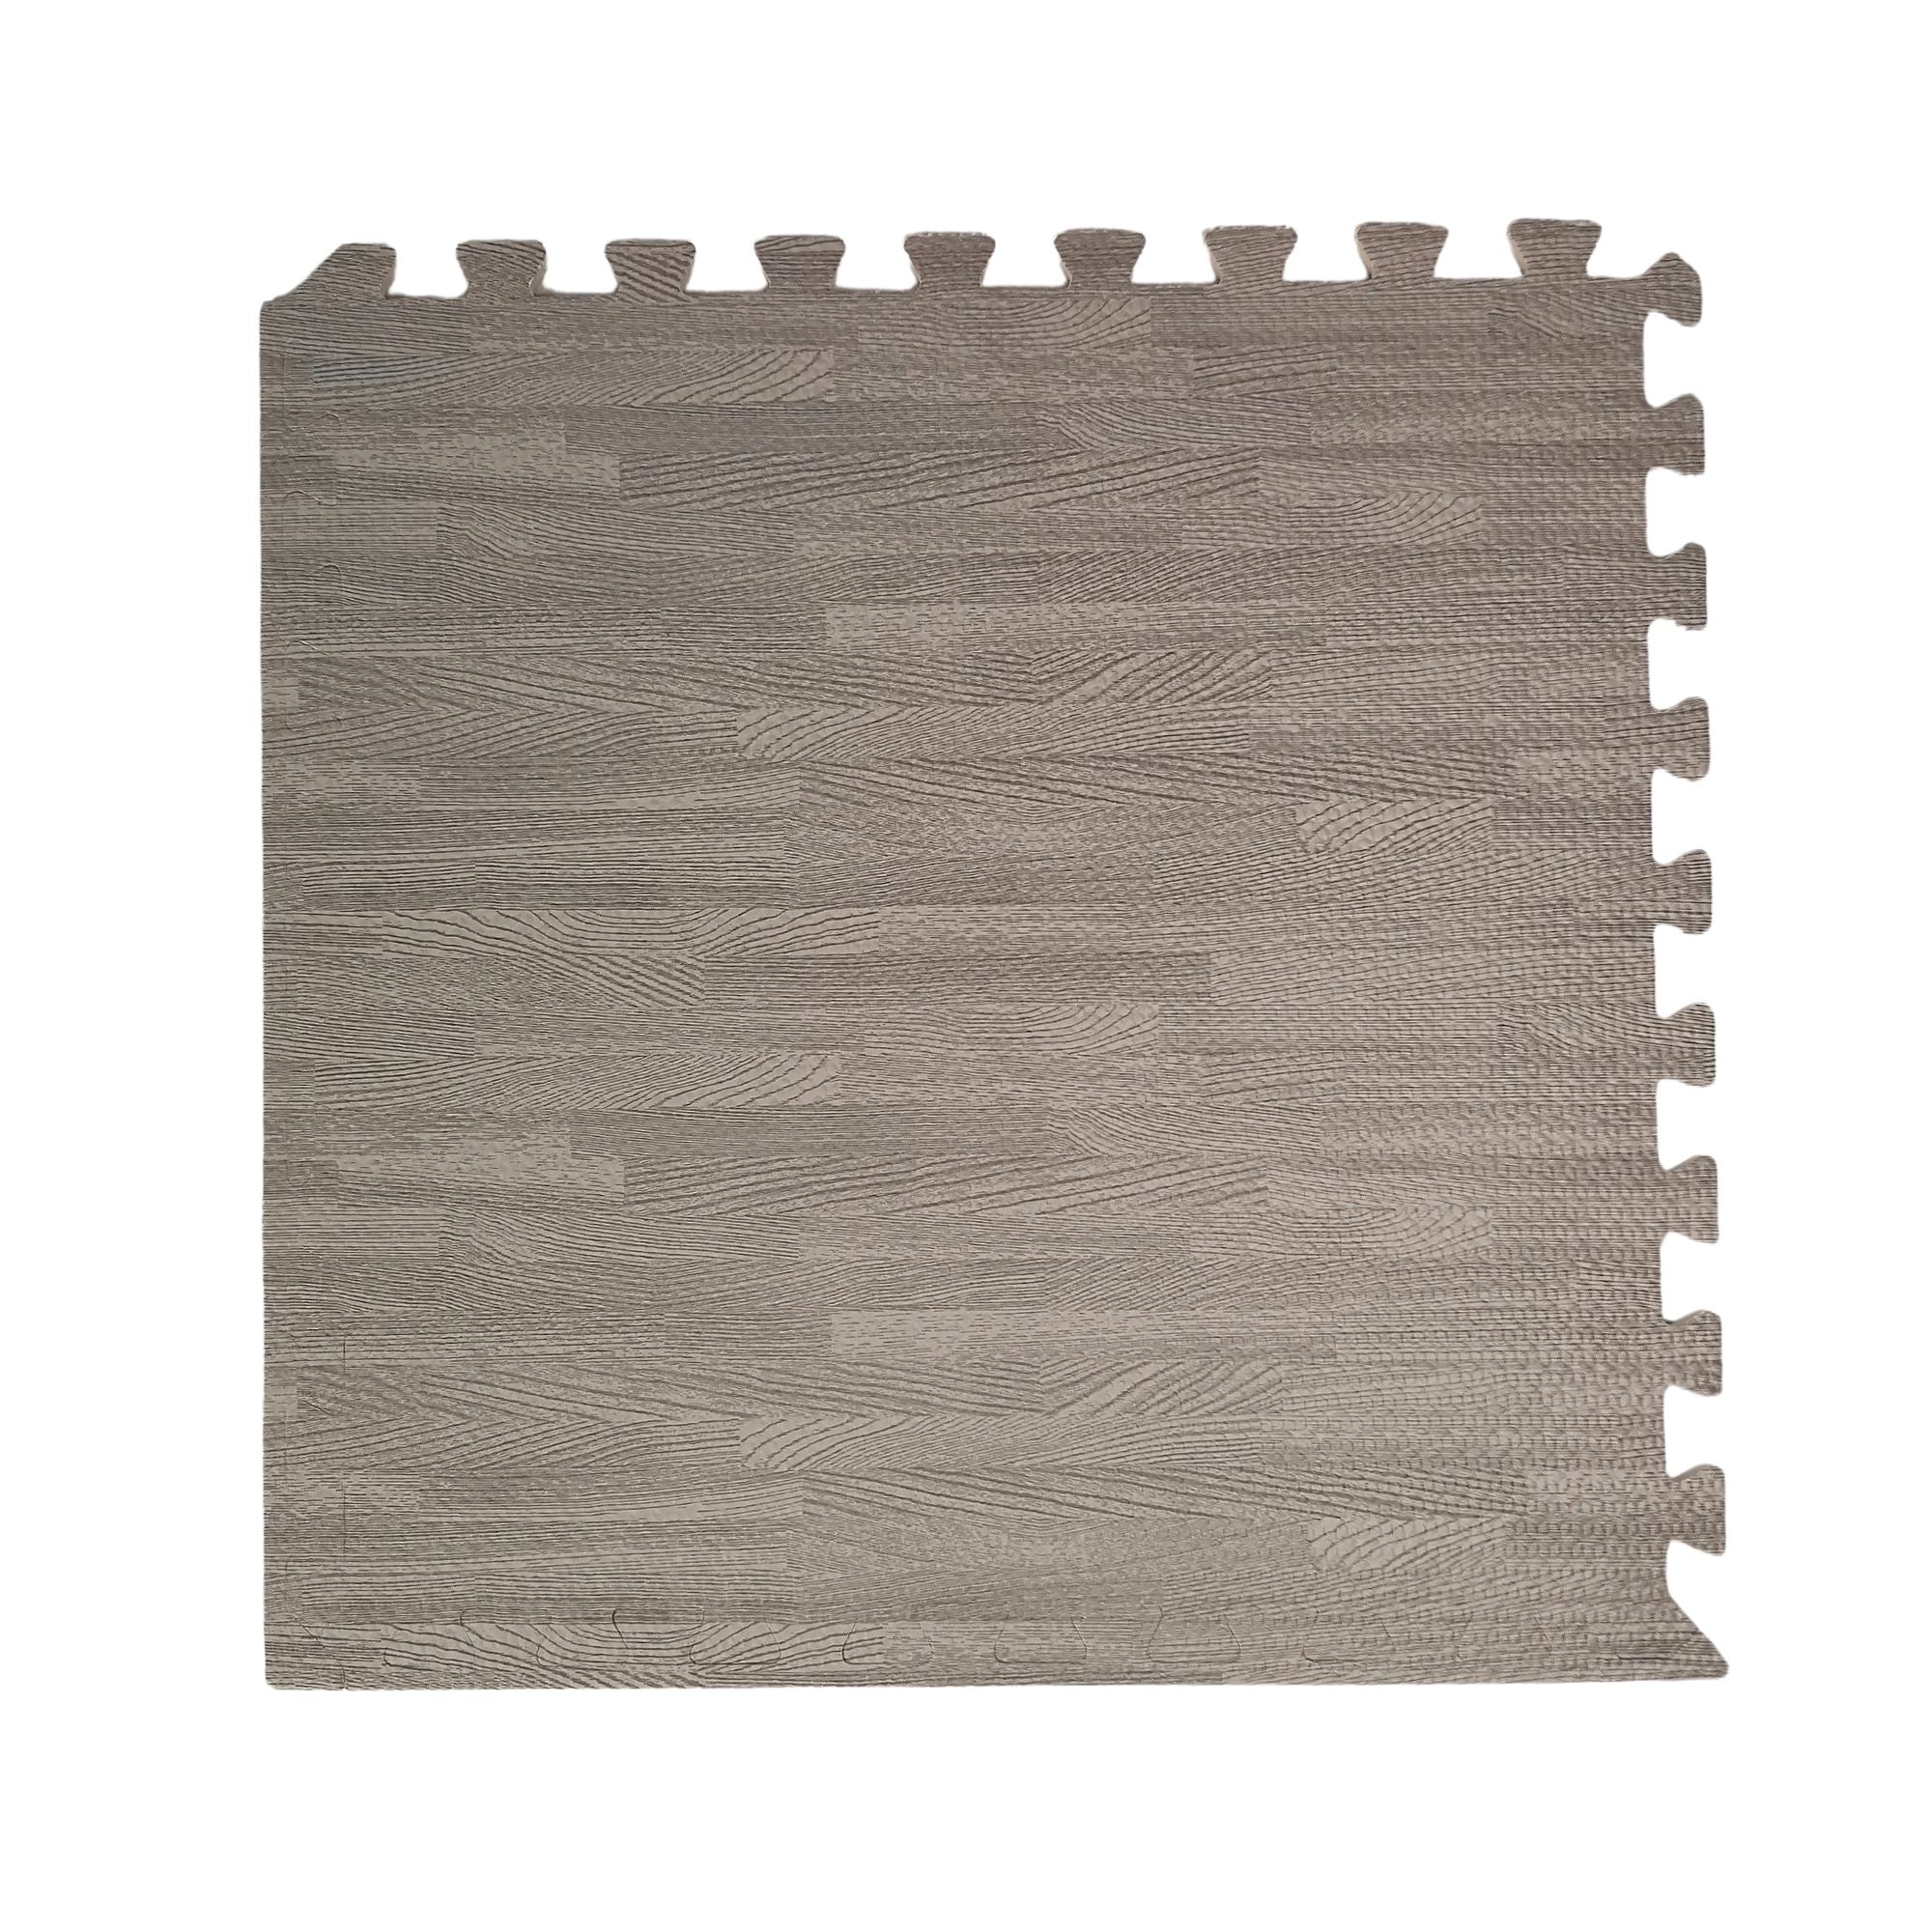 12 Piece Grey Wood Effect EVA Foam Floor Protective Floor Tiles / Mats 60x60cm Each Set For Gyms, Kitchens, Garages, Camping, Kids Play Matting, Flooring Mats Set Covers 4.32 sqm (46.5 sq ft)